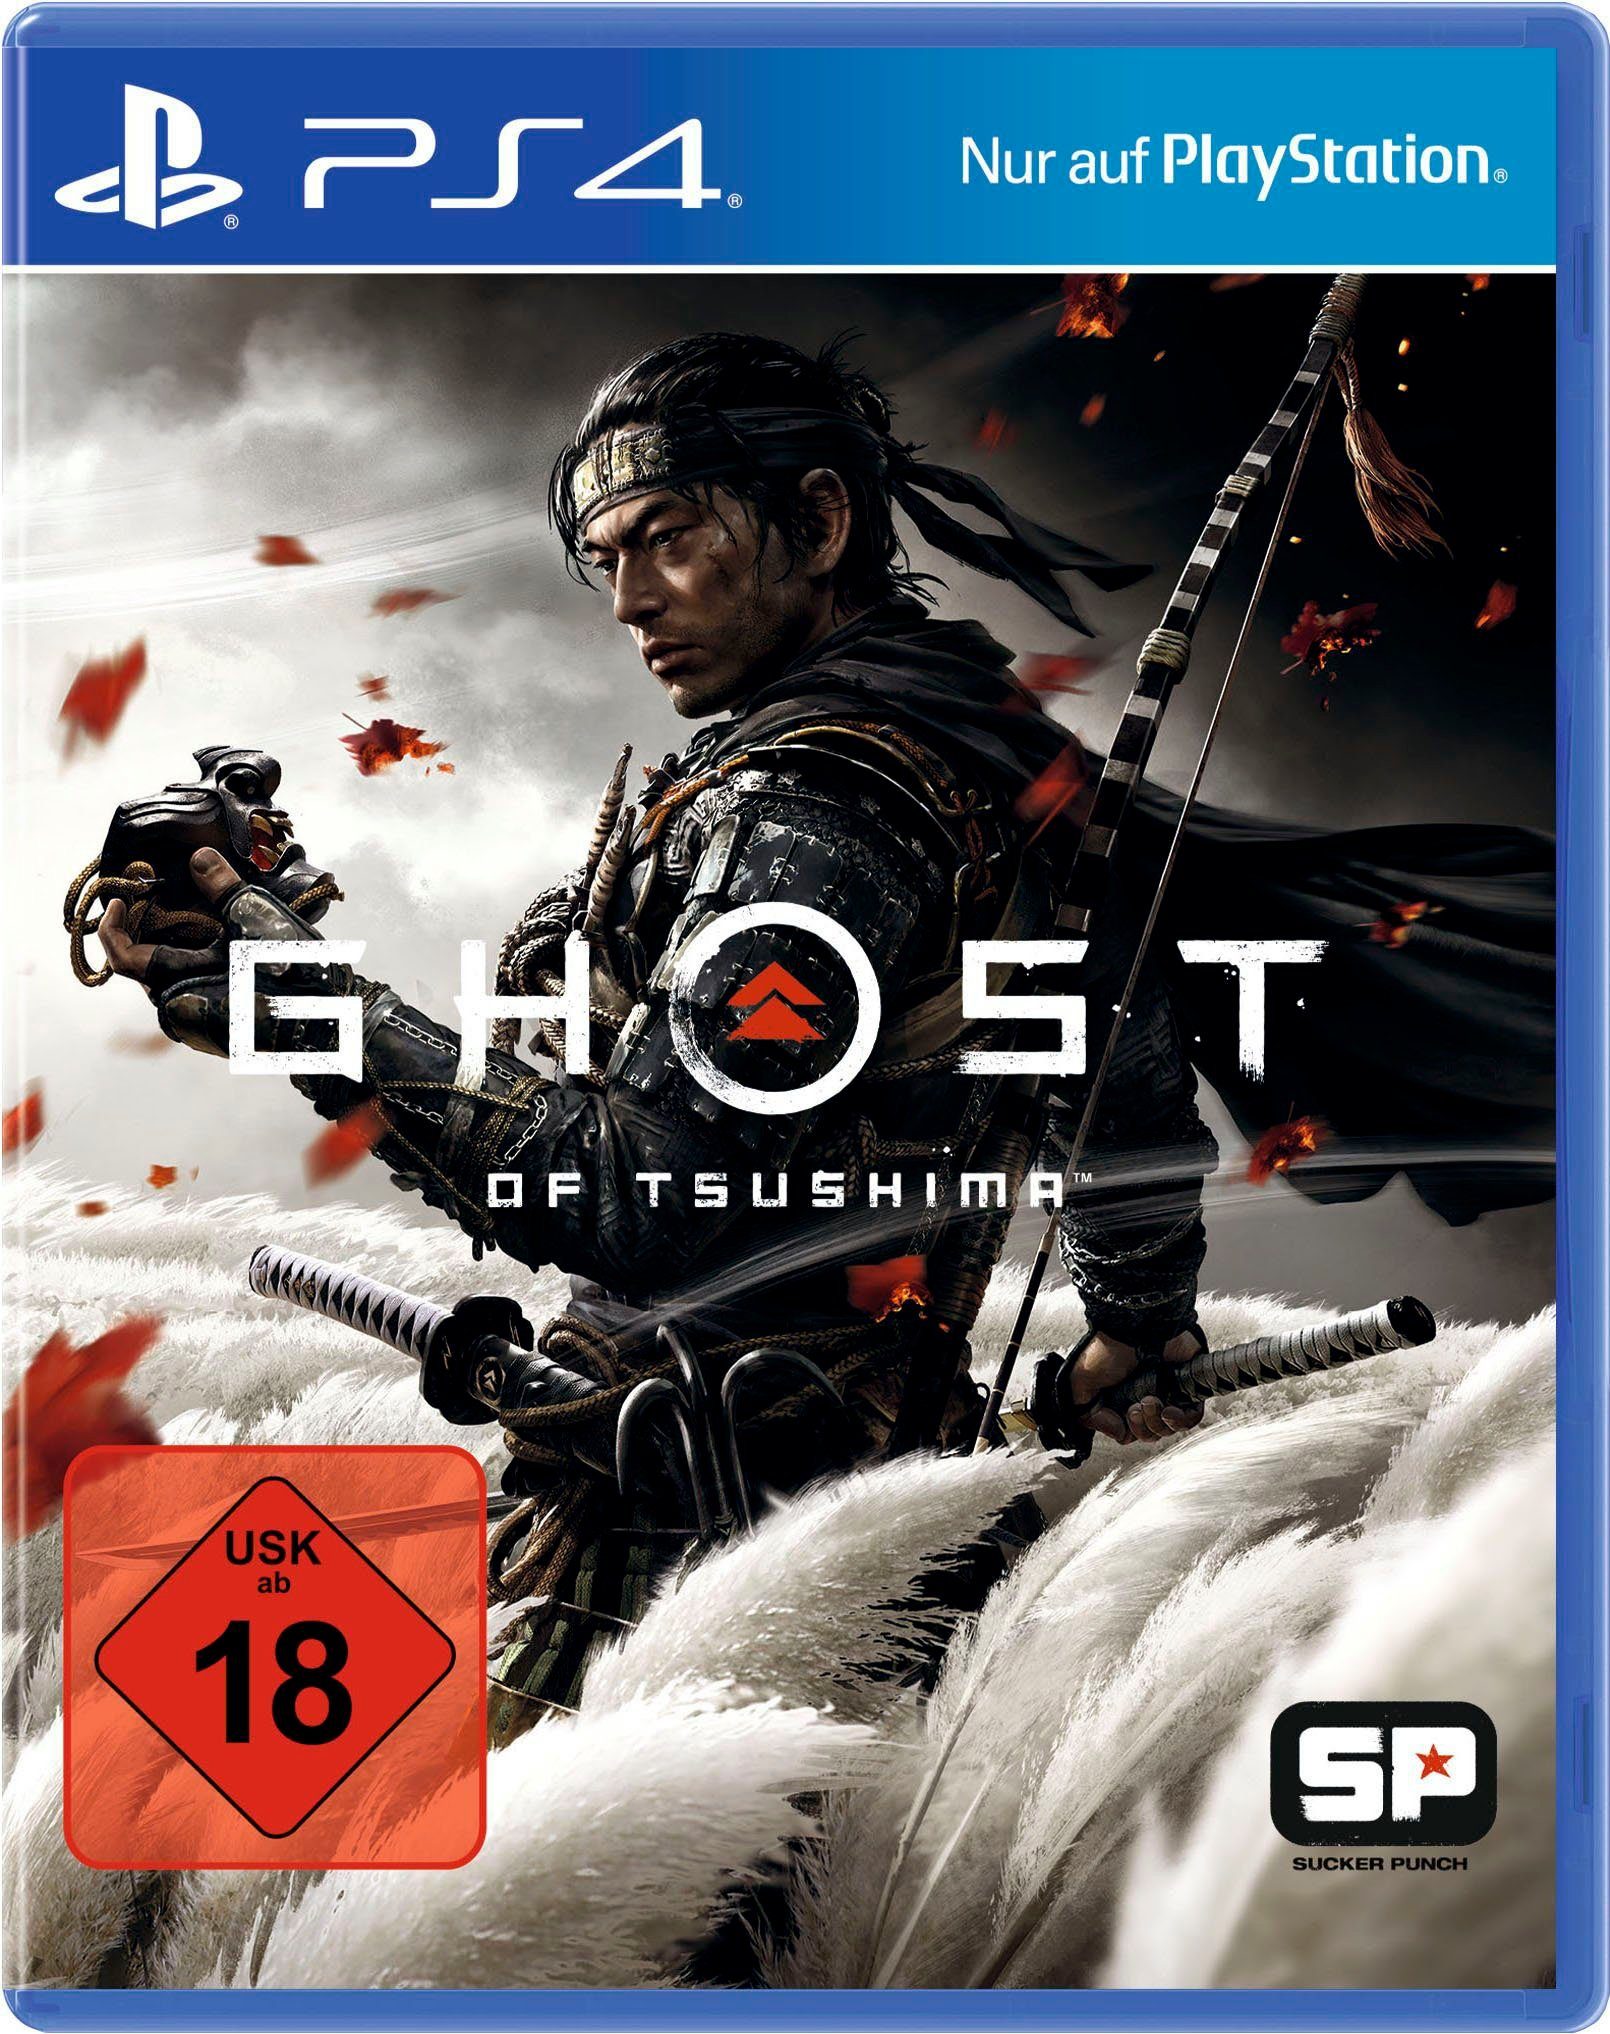 500GB, Ghost Slim, 4 of Tsushima inkl. PlayStation